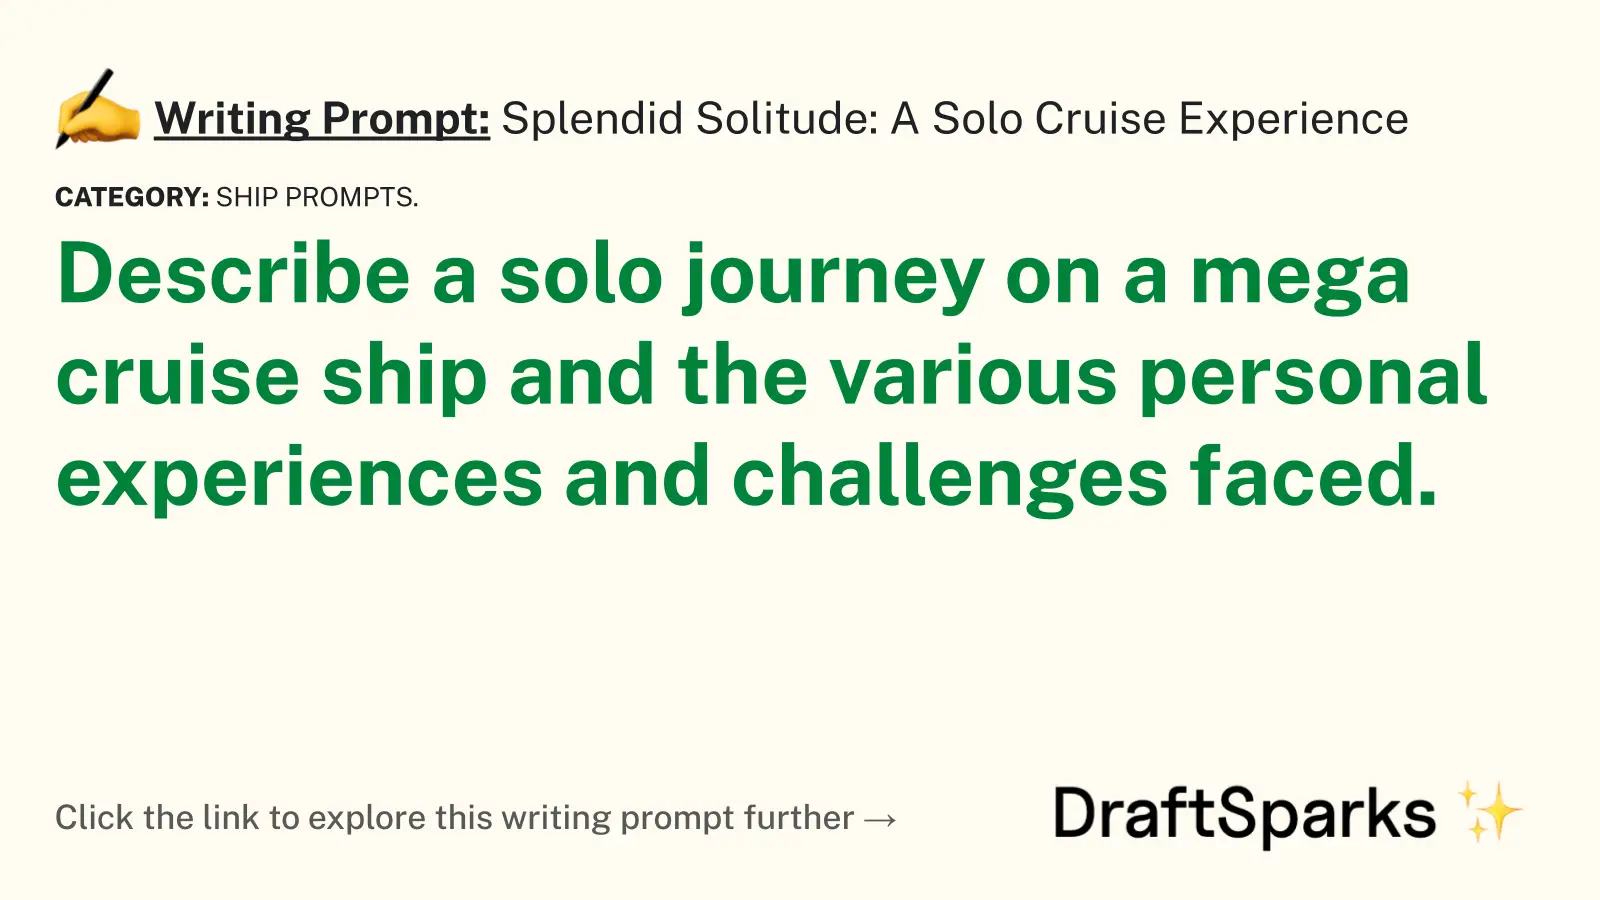 Splendid Solitude: A Solo Cruise Experience